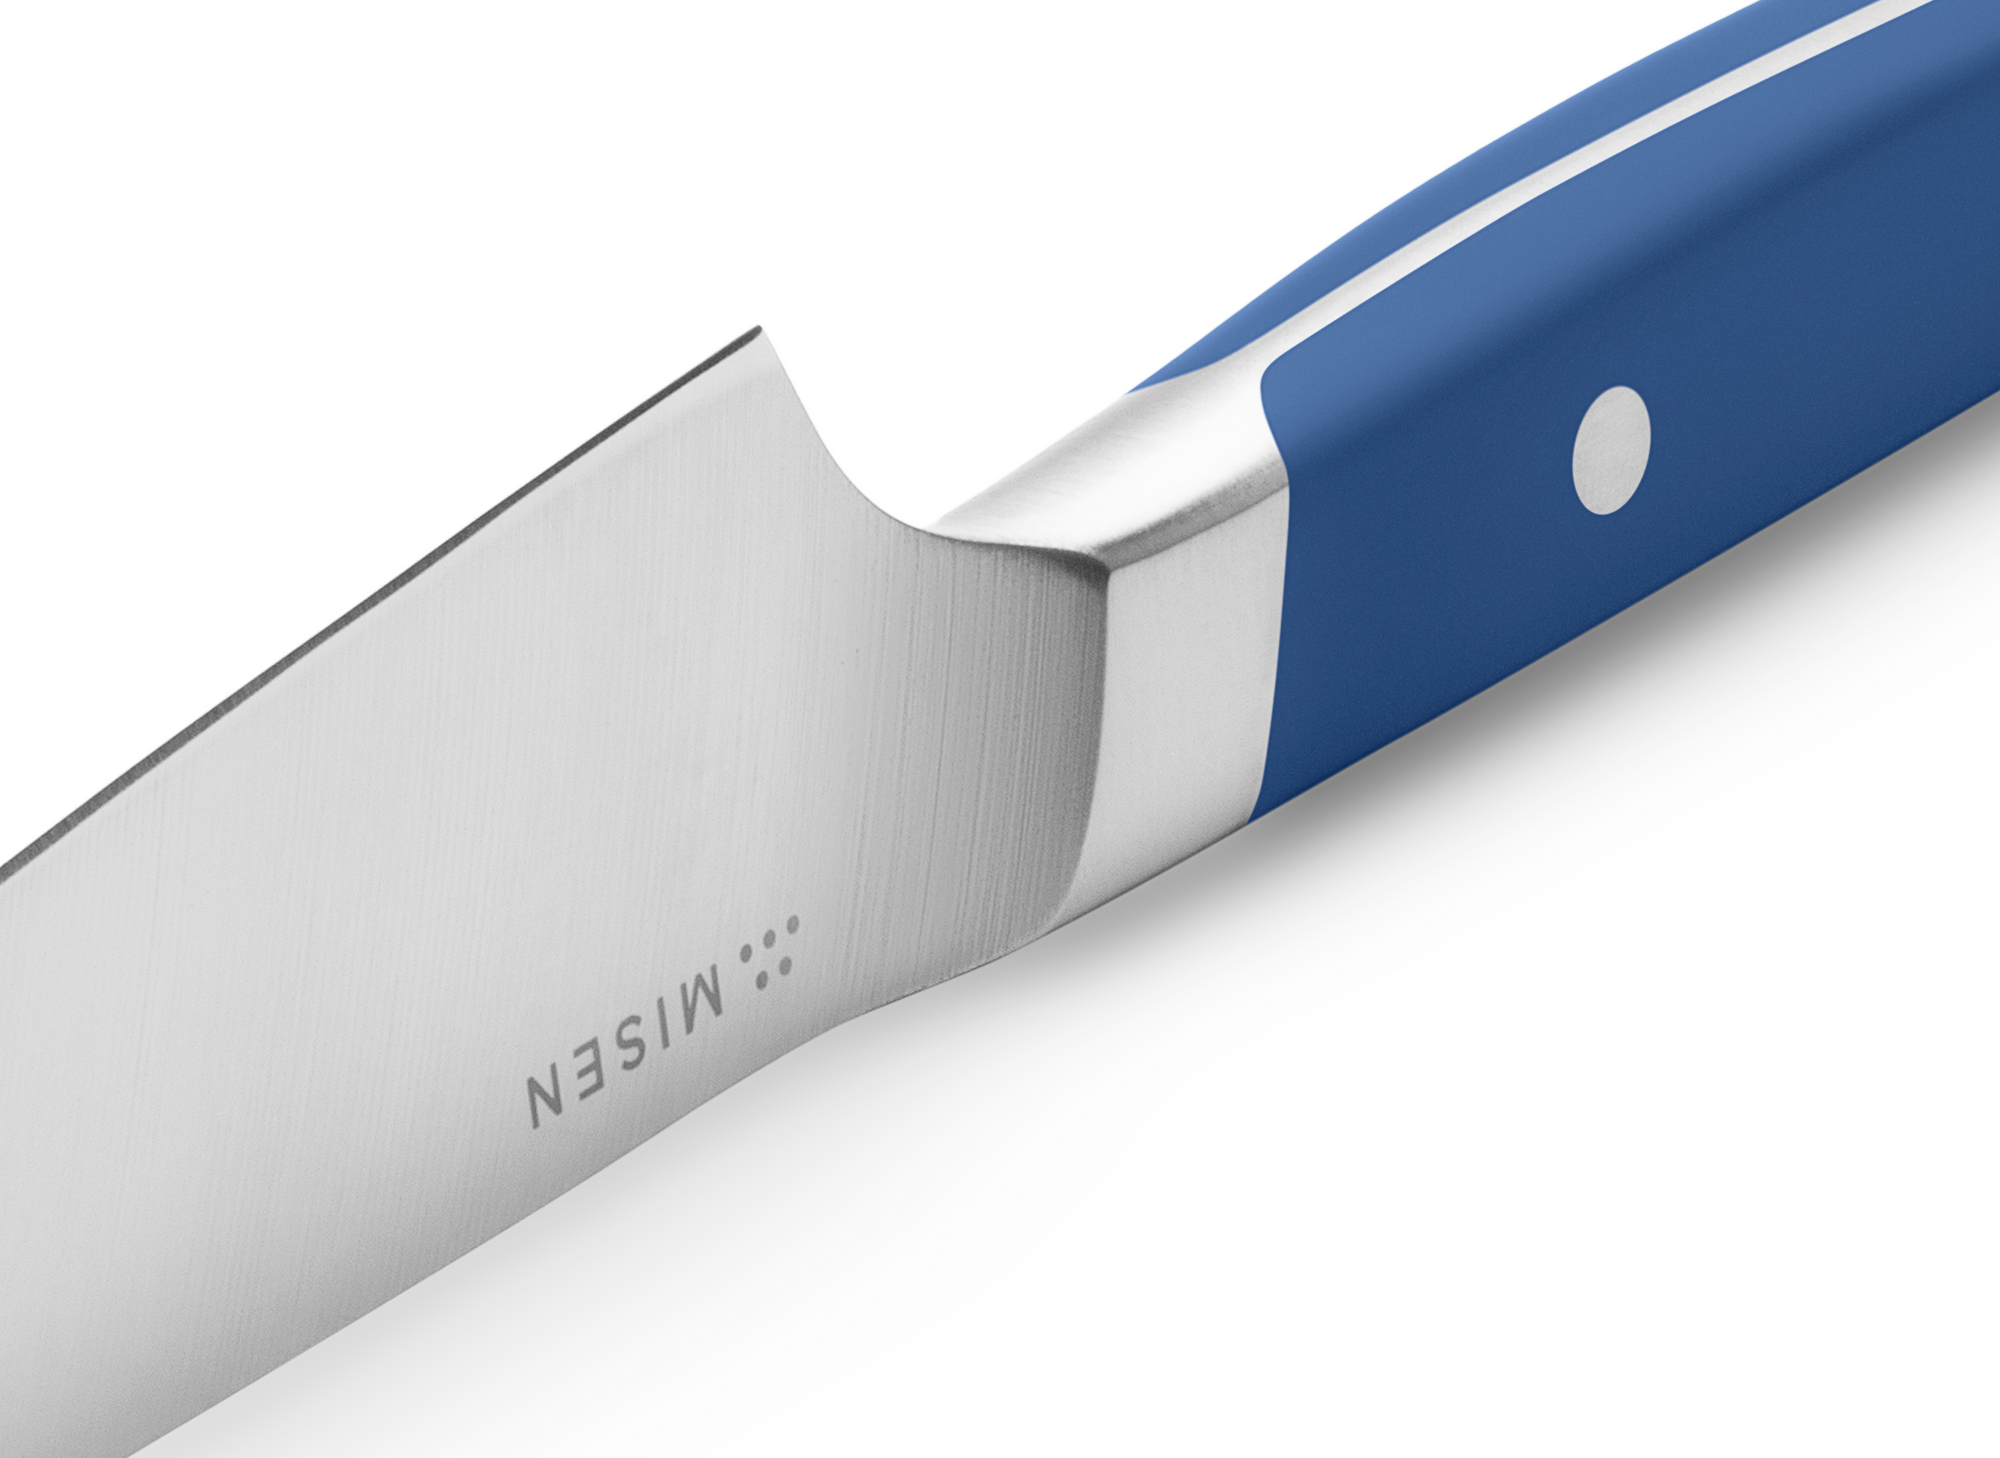 Utility Knife vs. Chef Knife